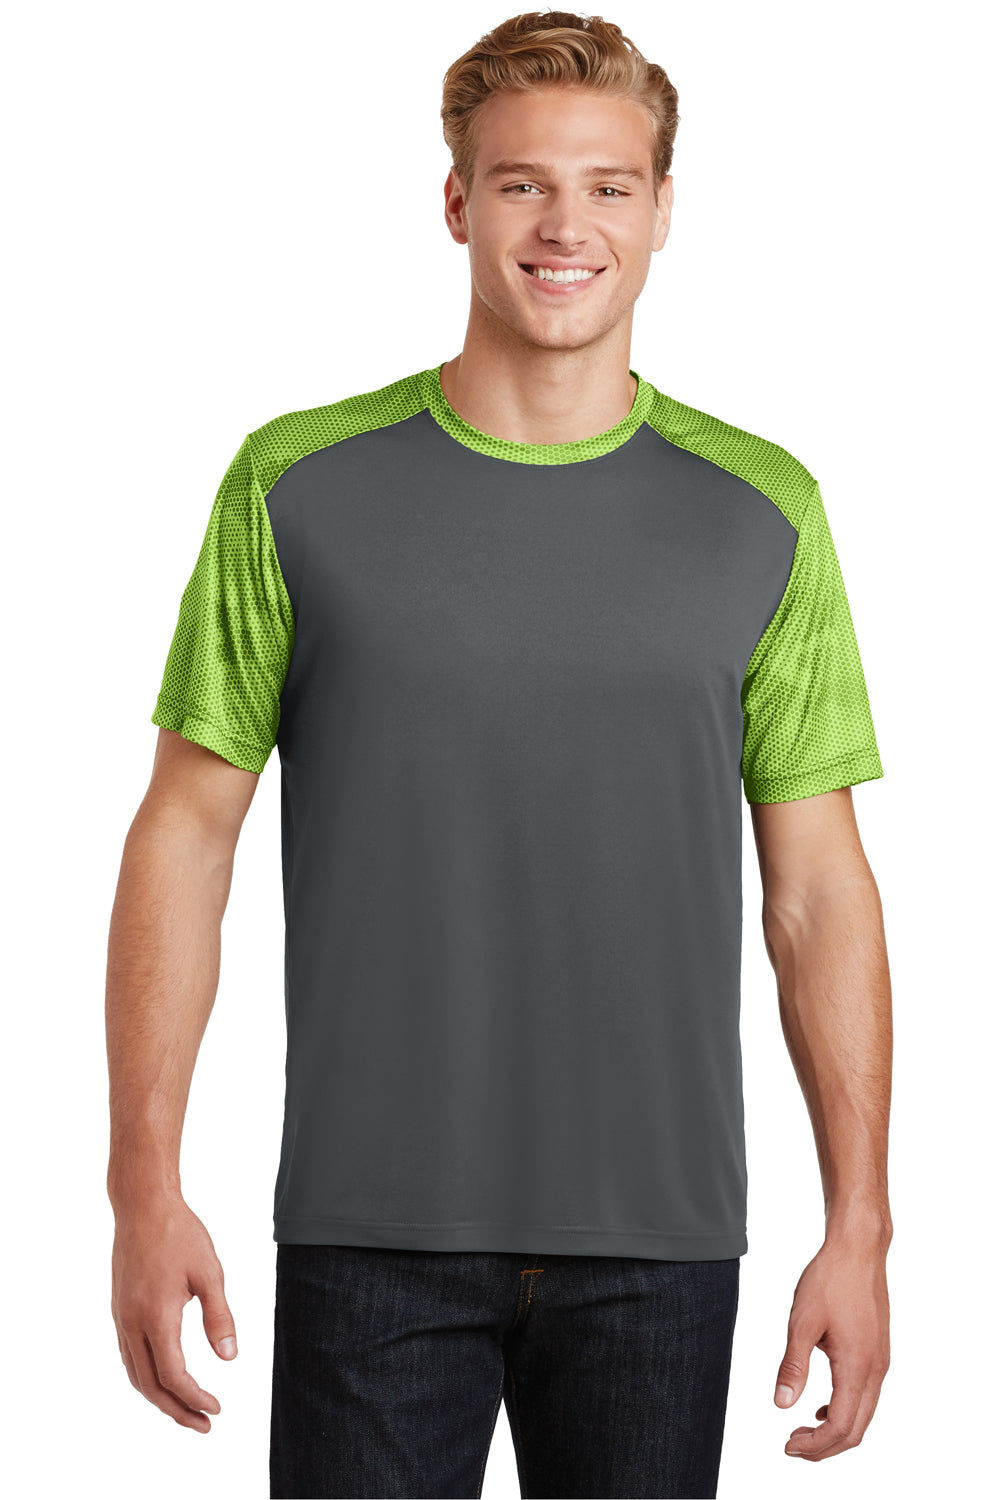 Sport-Tek ST371 Mens CamoHex Moisture Wicking Short Sleeve Crewneck T-Shirt Iron Grey/Lime Green Front